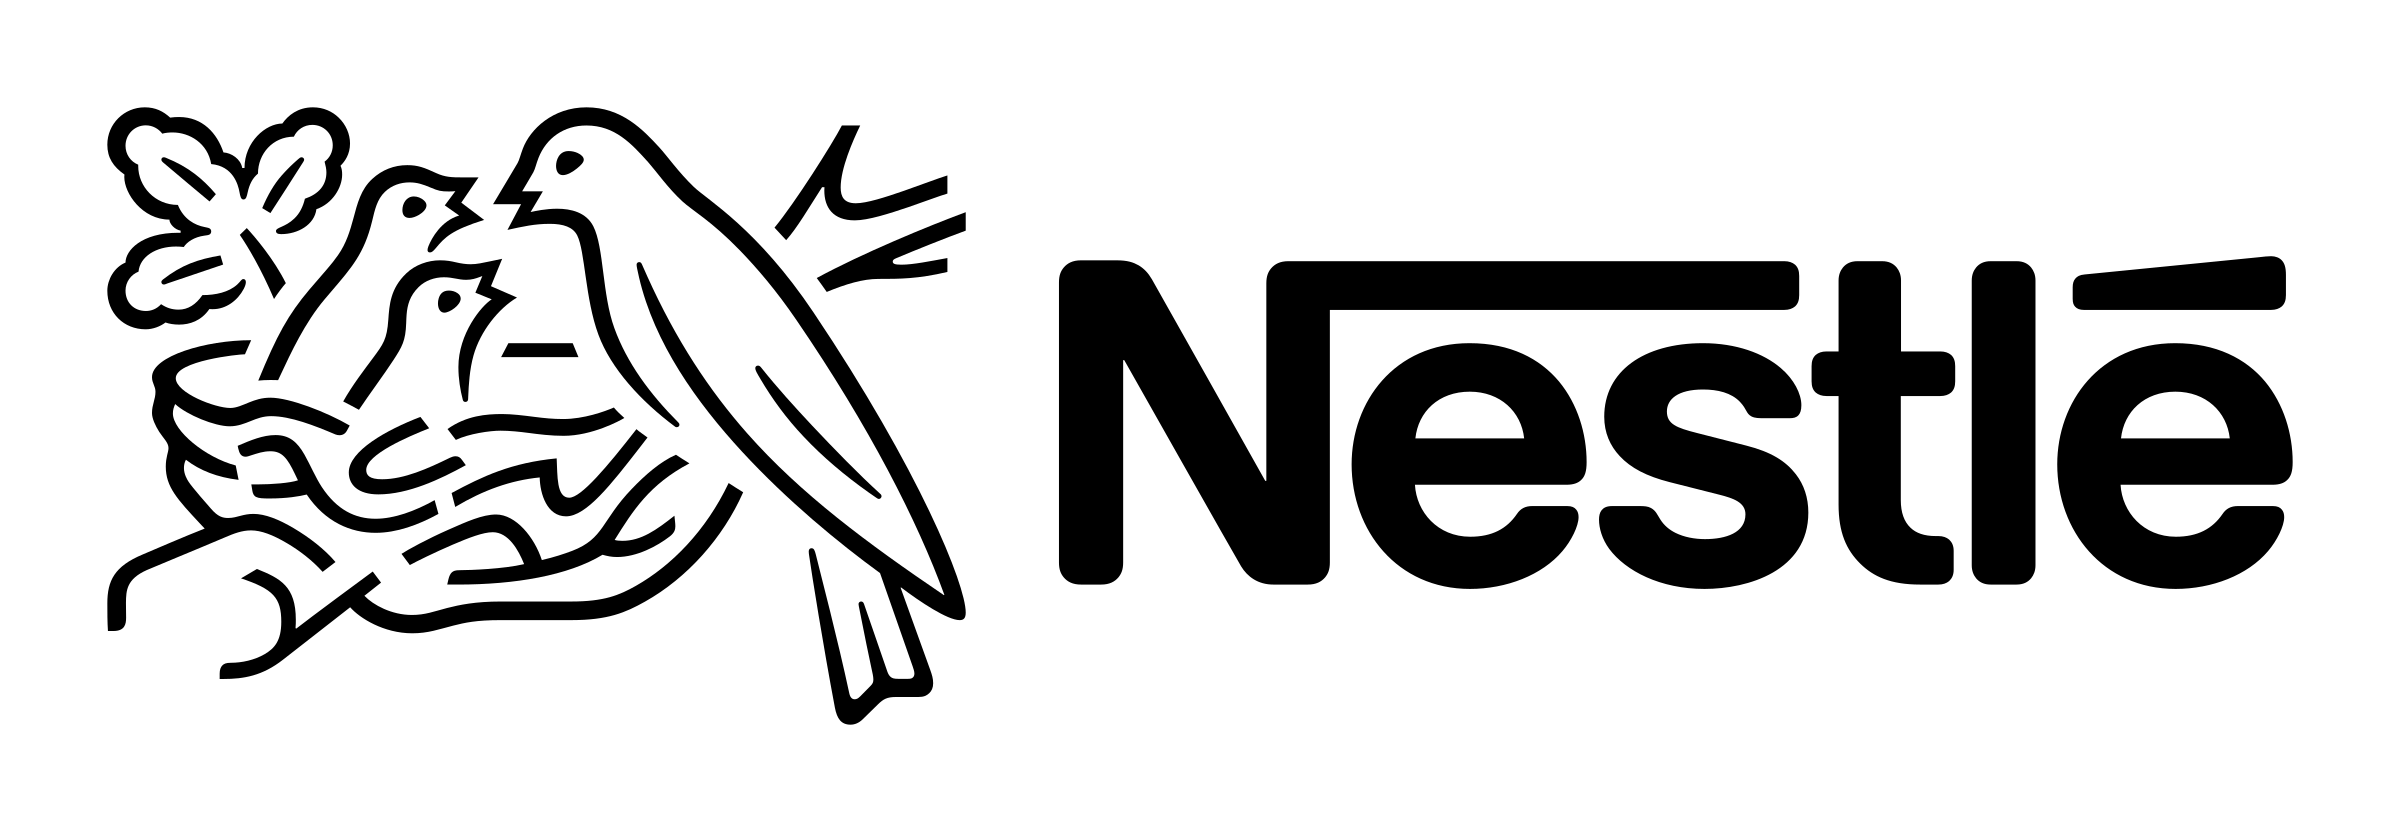 nestle-logo-black-and-white (1)